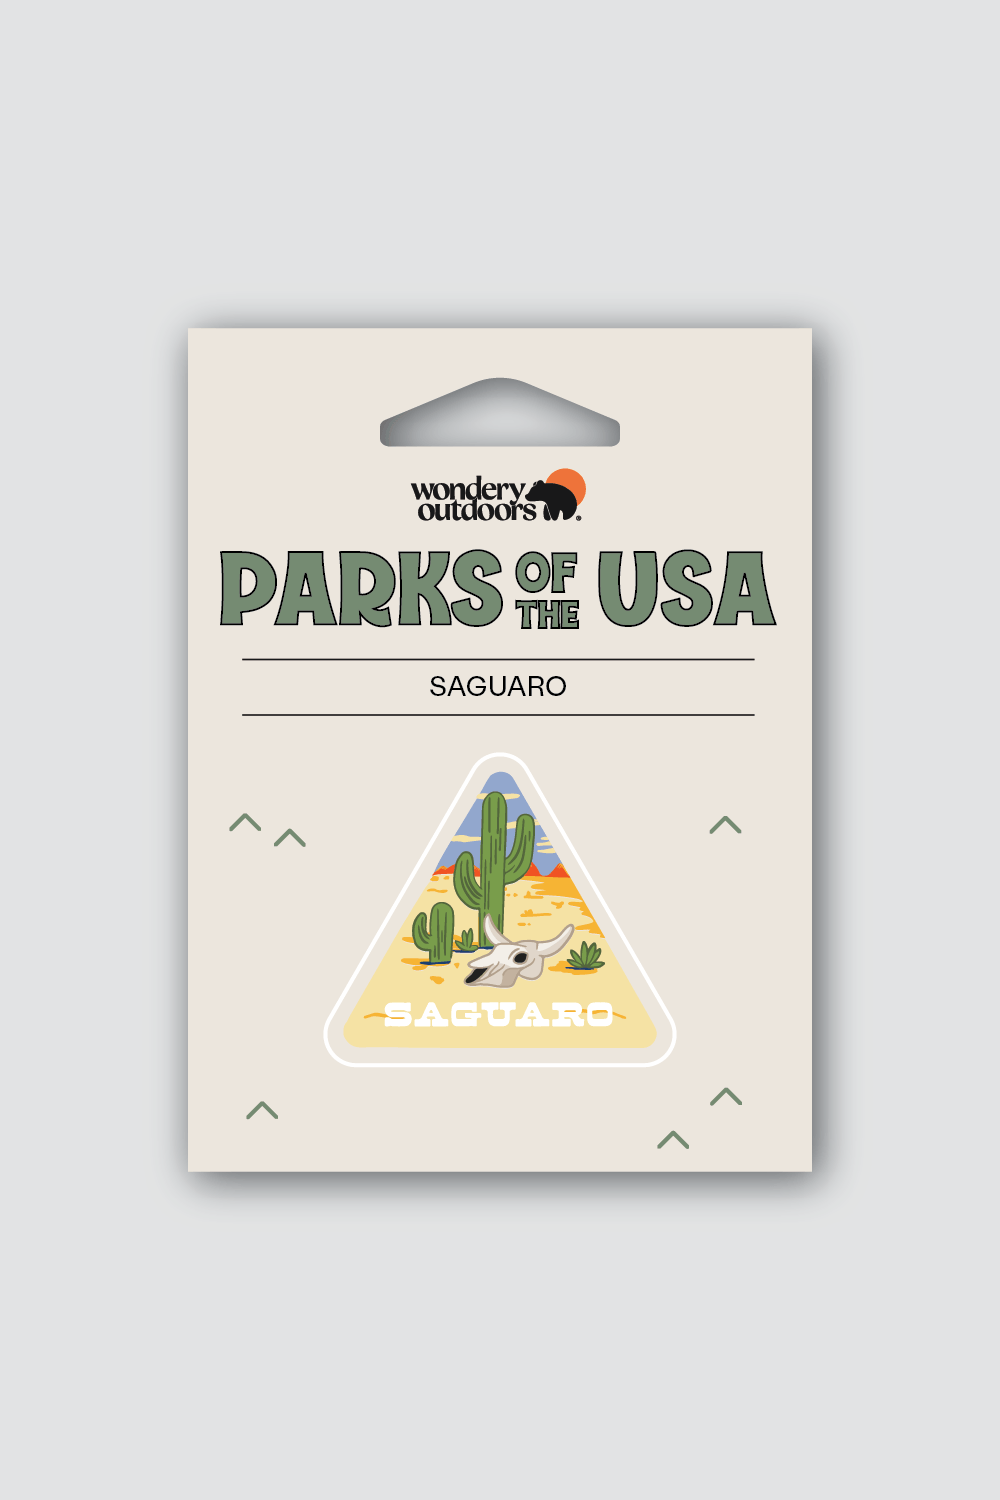 #national park_saguaro _USA National Parks souvenir sticker gift sets